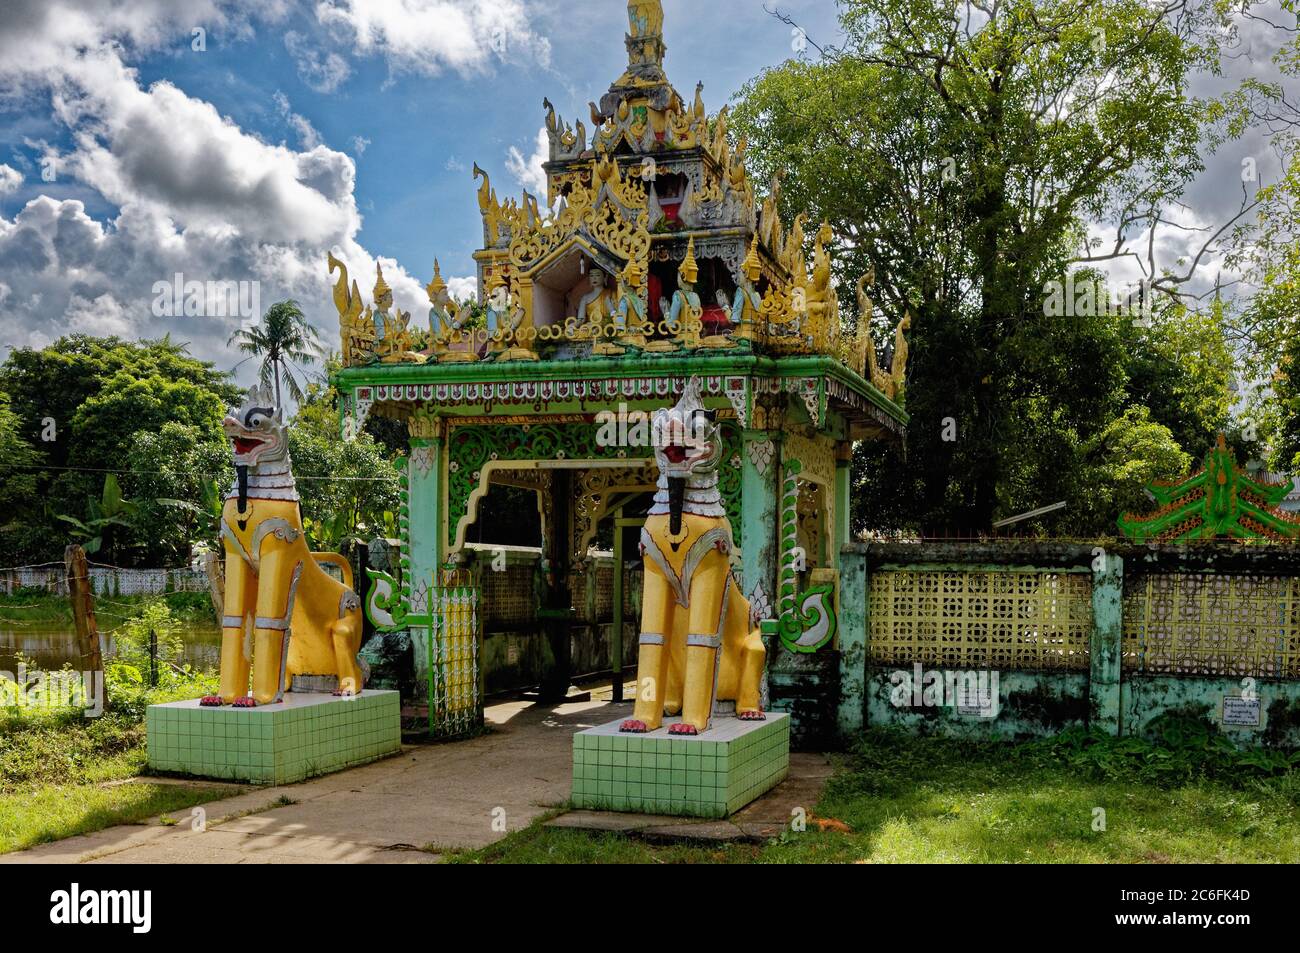 Demonic lions guarding the entry to Shwe Sayan Pagoda, Dala, Yangon, Myanmar Stock Photo